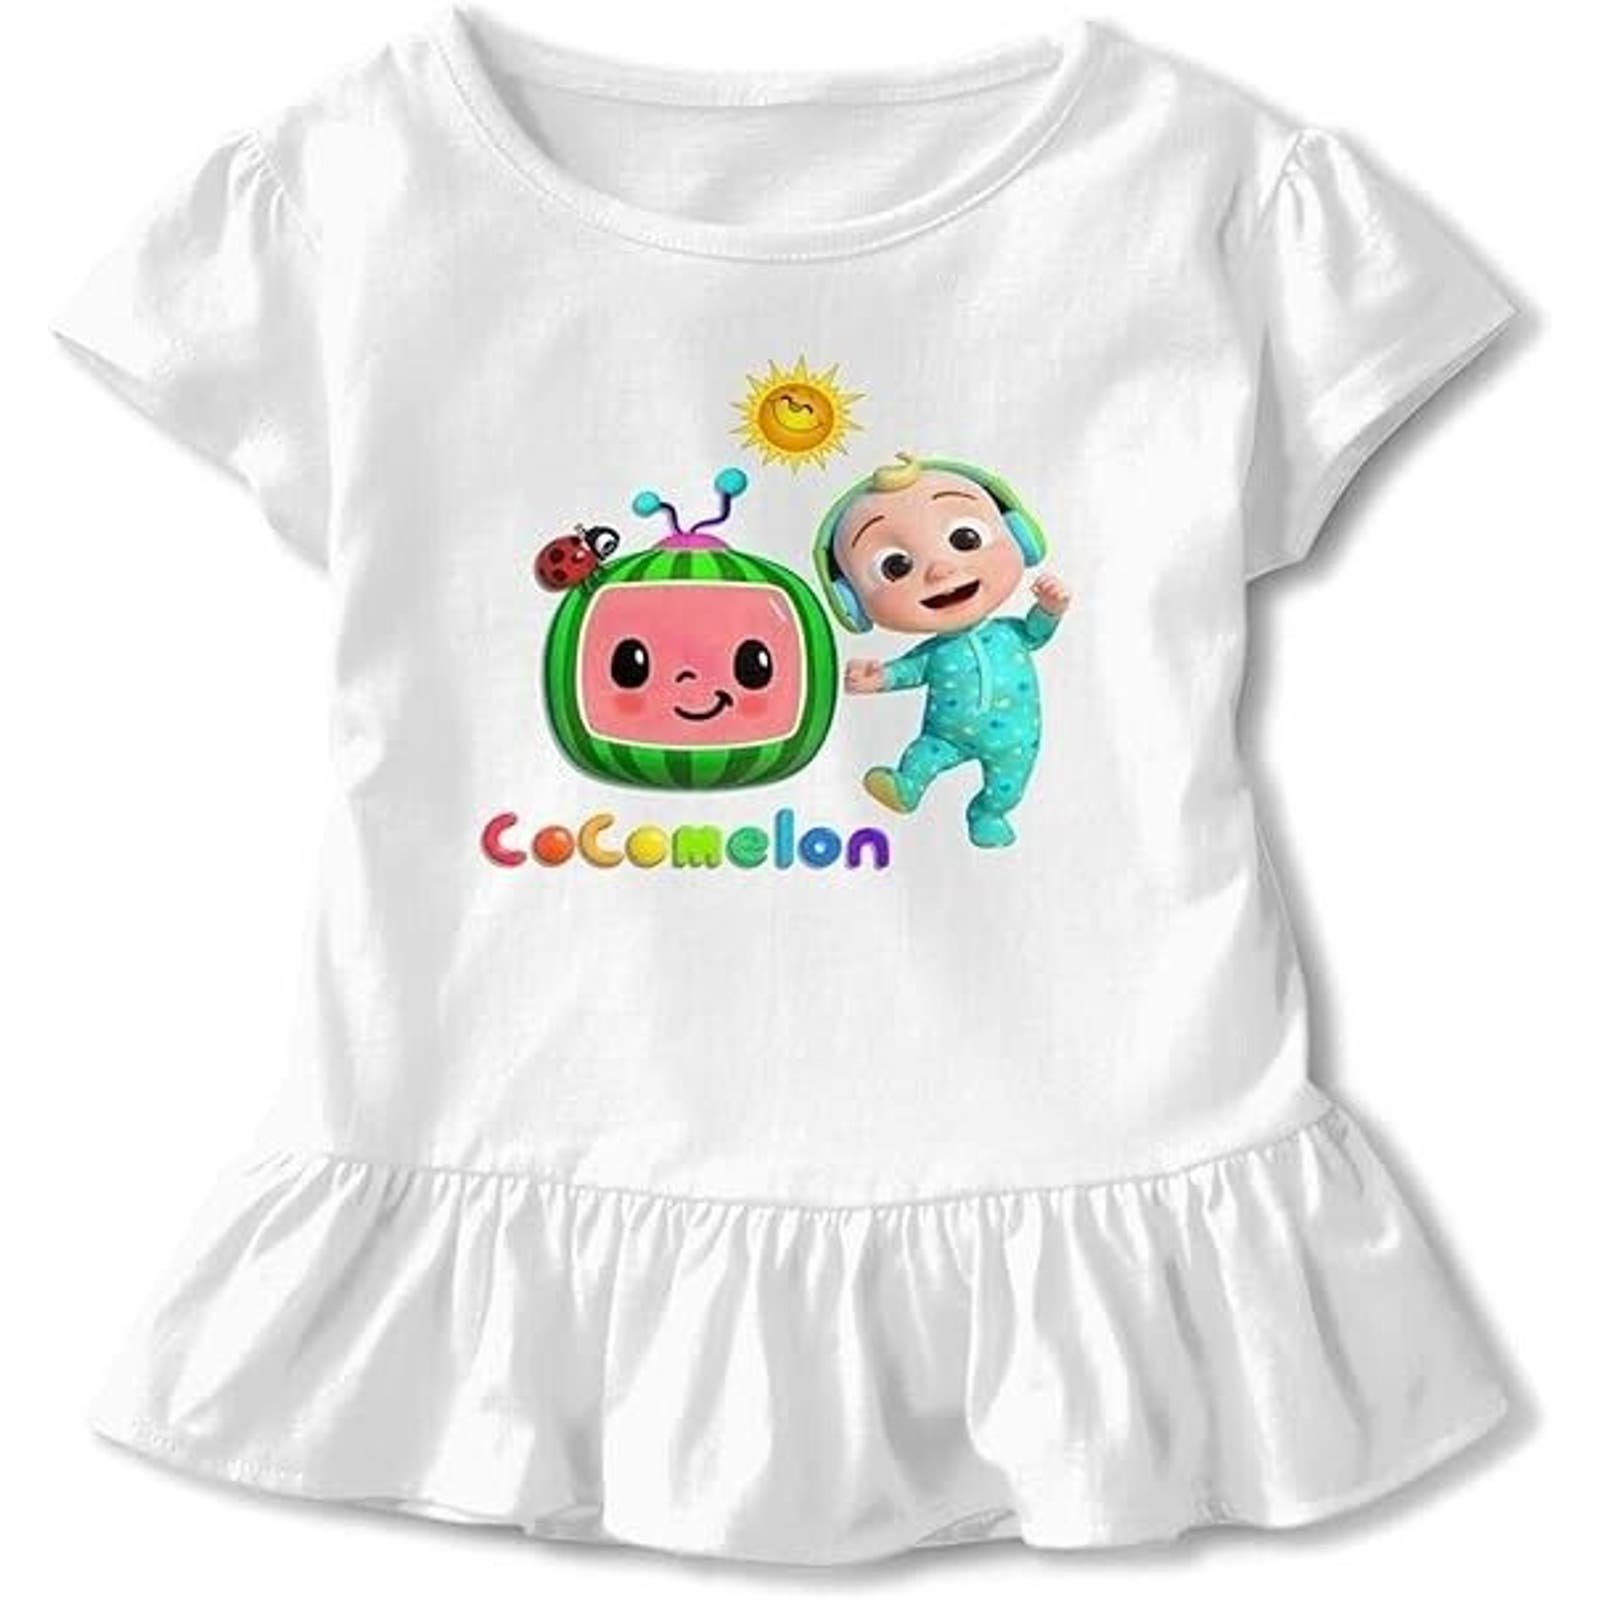 Bangogo Shirt Girls White Cocomelon Print Short Sleeve Ruffle for Toddlers 5/6T Oyt7gk18j